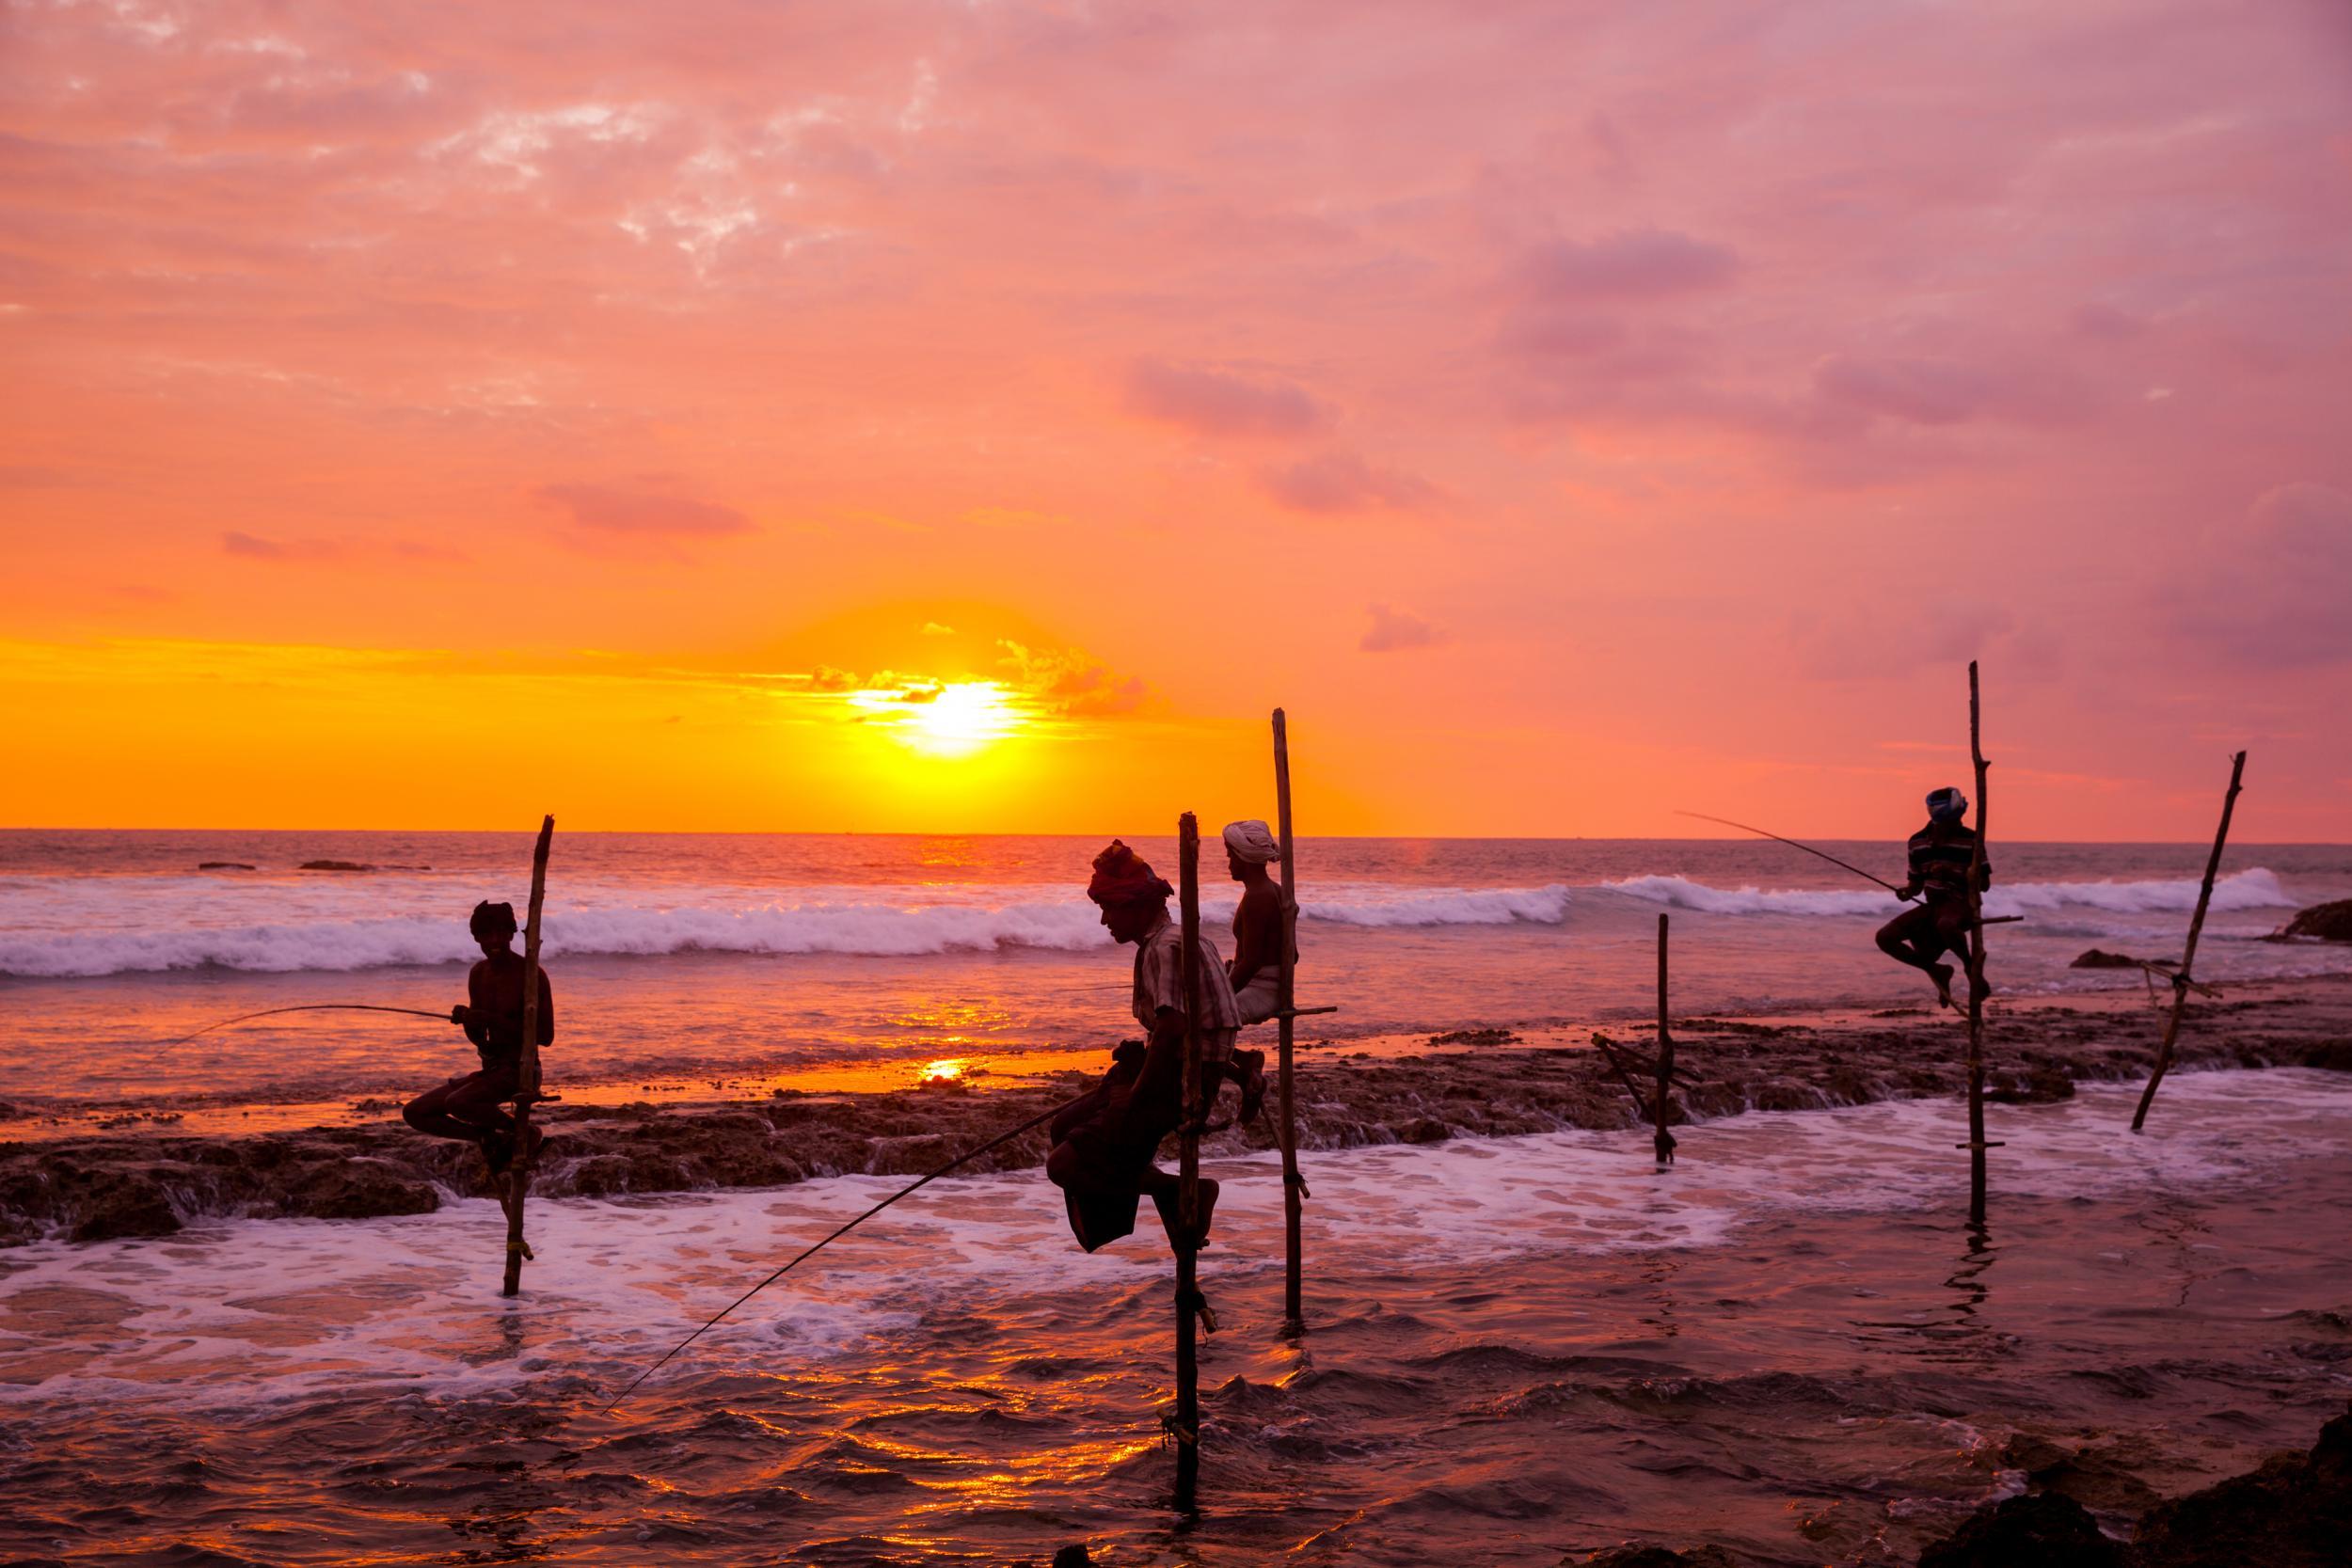 Stilt fishermen at work as the sun sets on Sri Lanka's coast